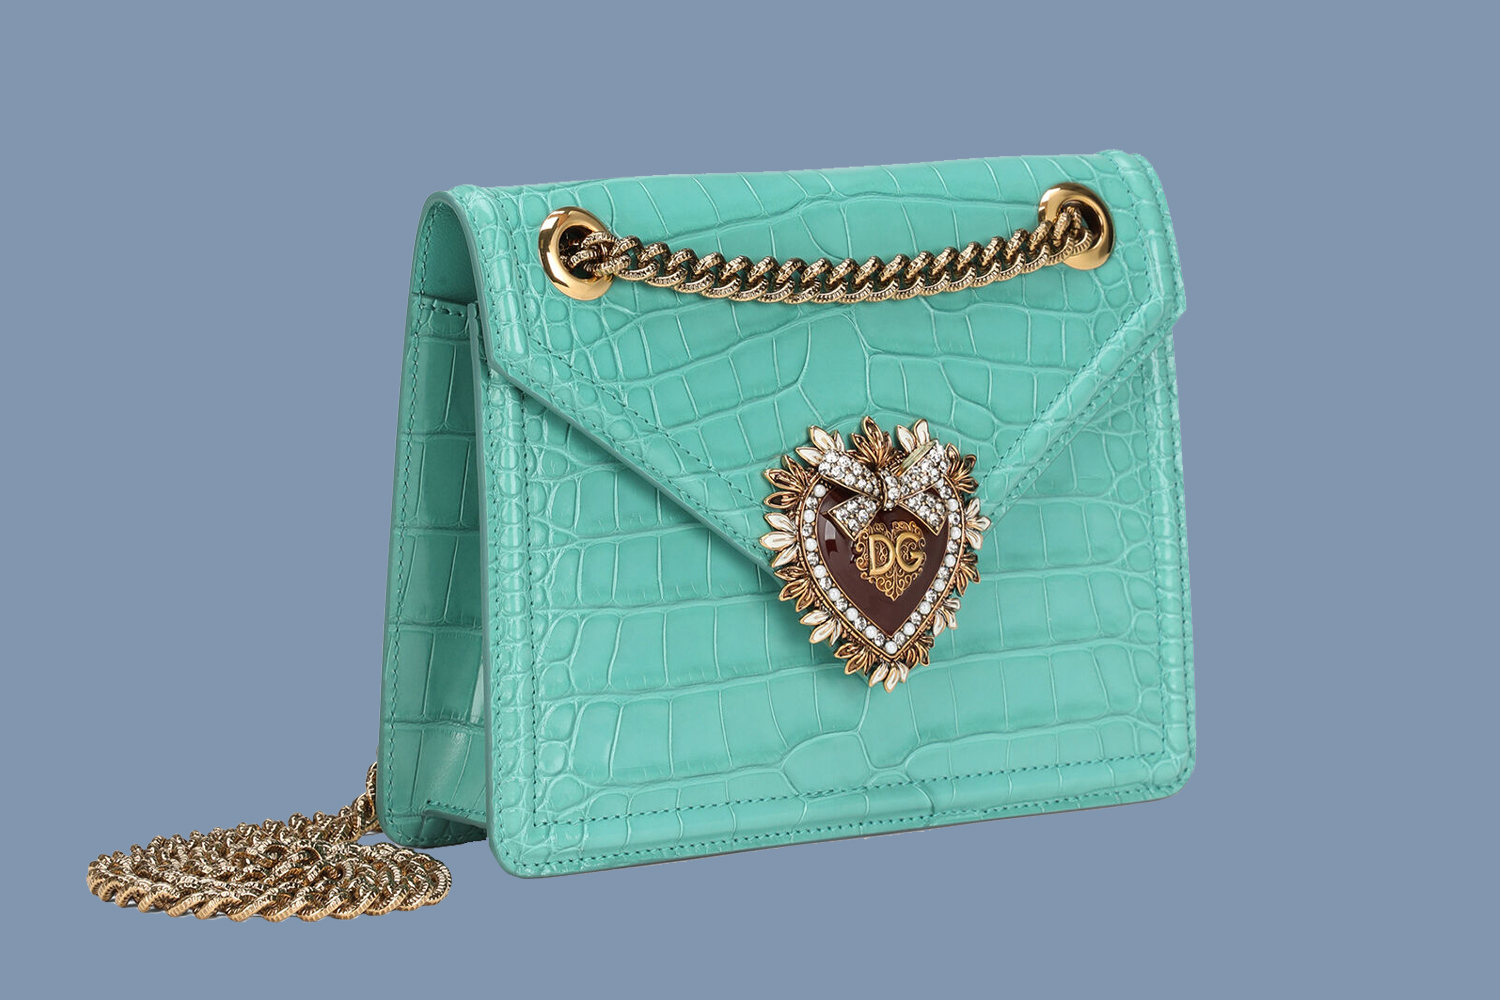 Dolce&Gabbana Devotion bag